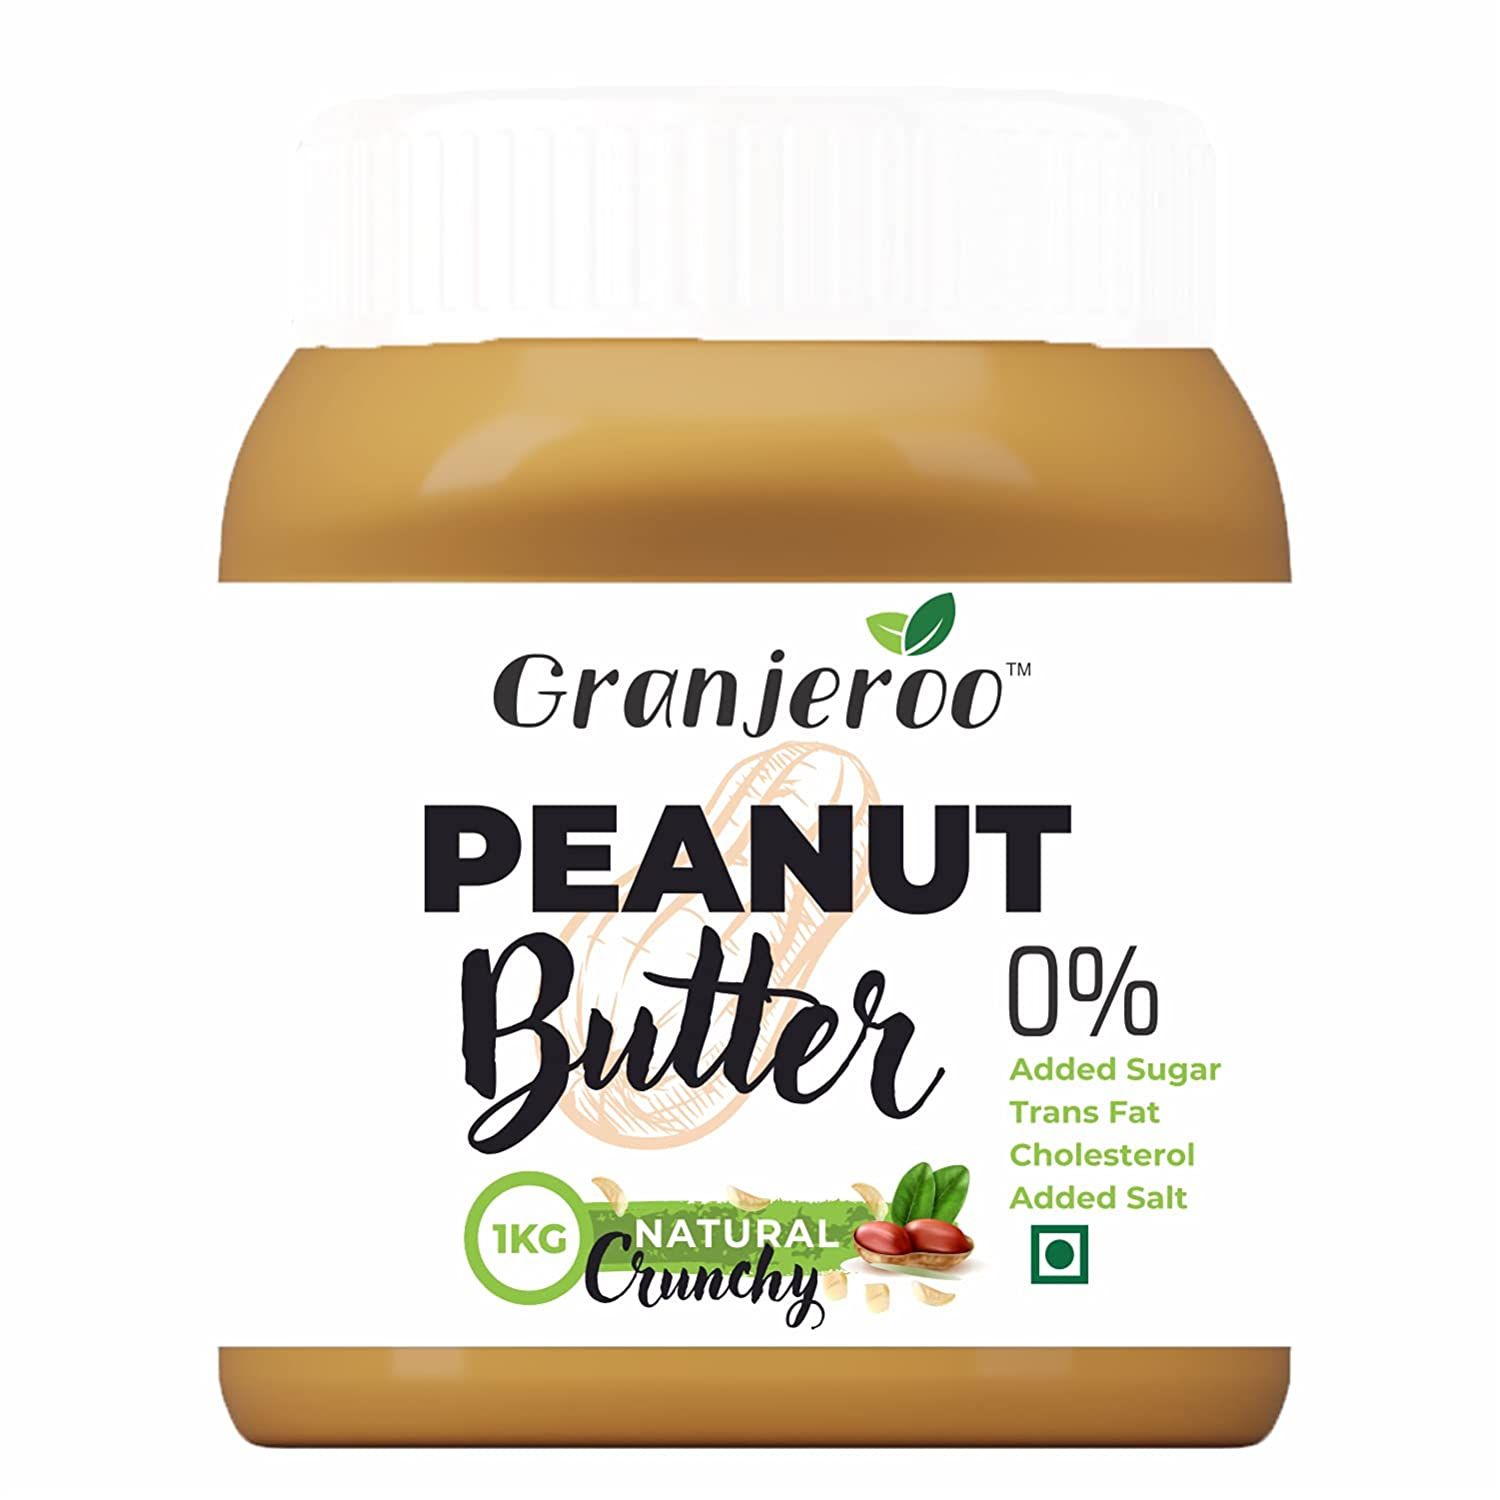 Granjeroo Natural Crunchy Peanut Butter Image